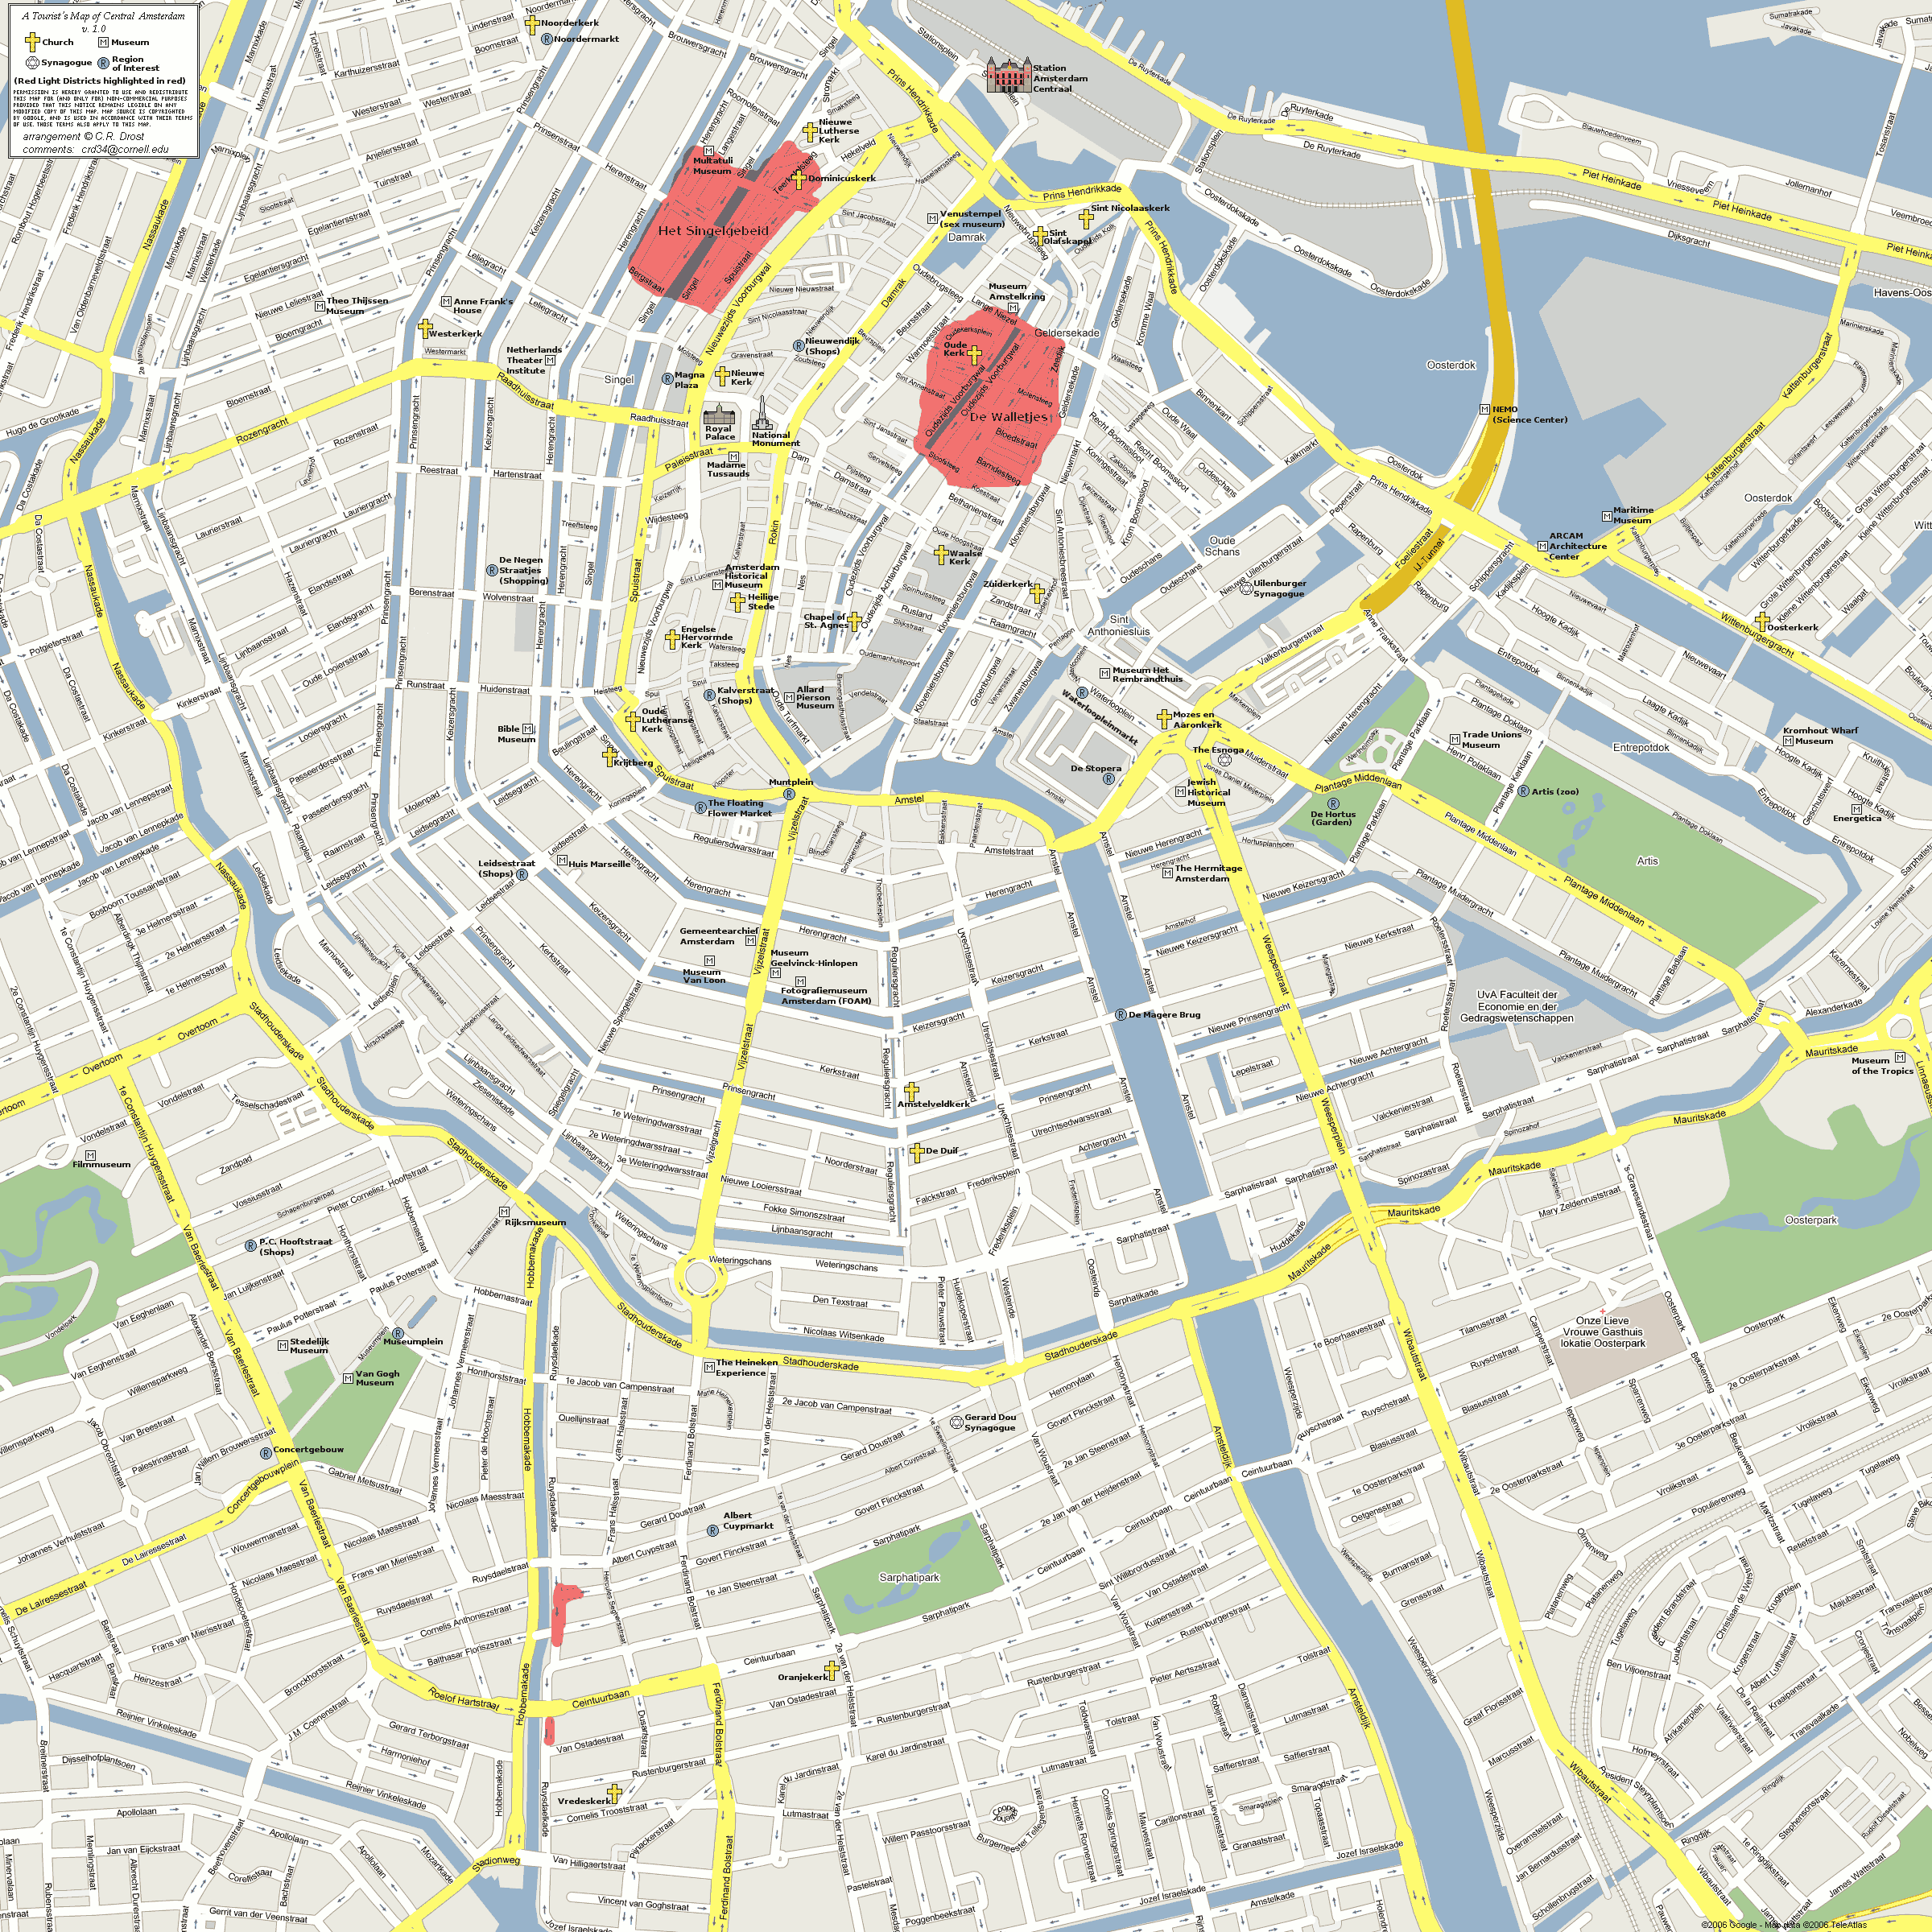 Cheap Hotel Clickable Map Amsterdam City Centre Amsterdam Kilometres Follow Miles